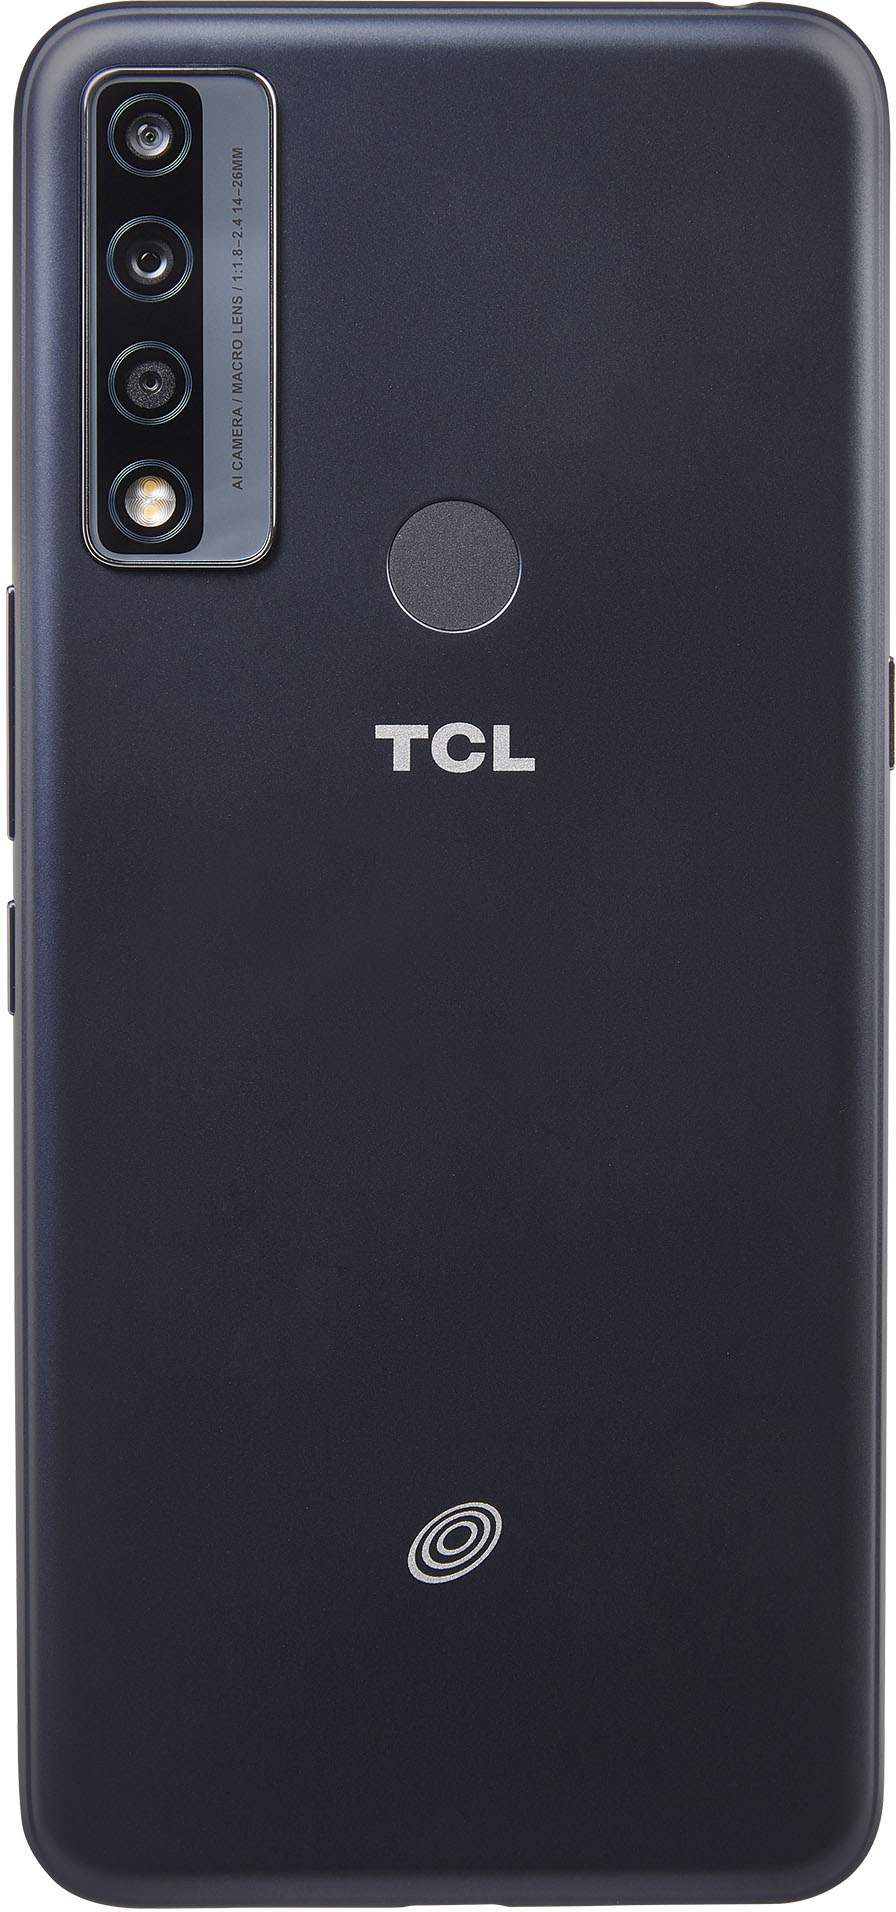 Back View: Tracfone Alcatel TCL 4X 5G, 64GB Cyan Gray – Prepaid Smartphone